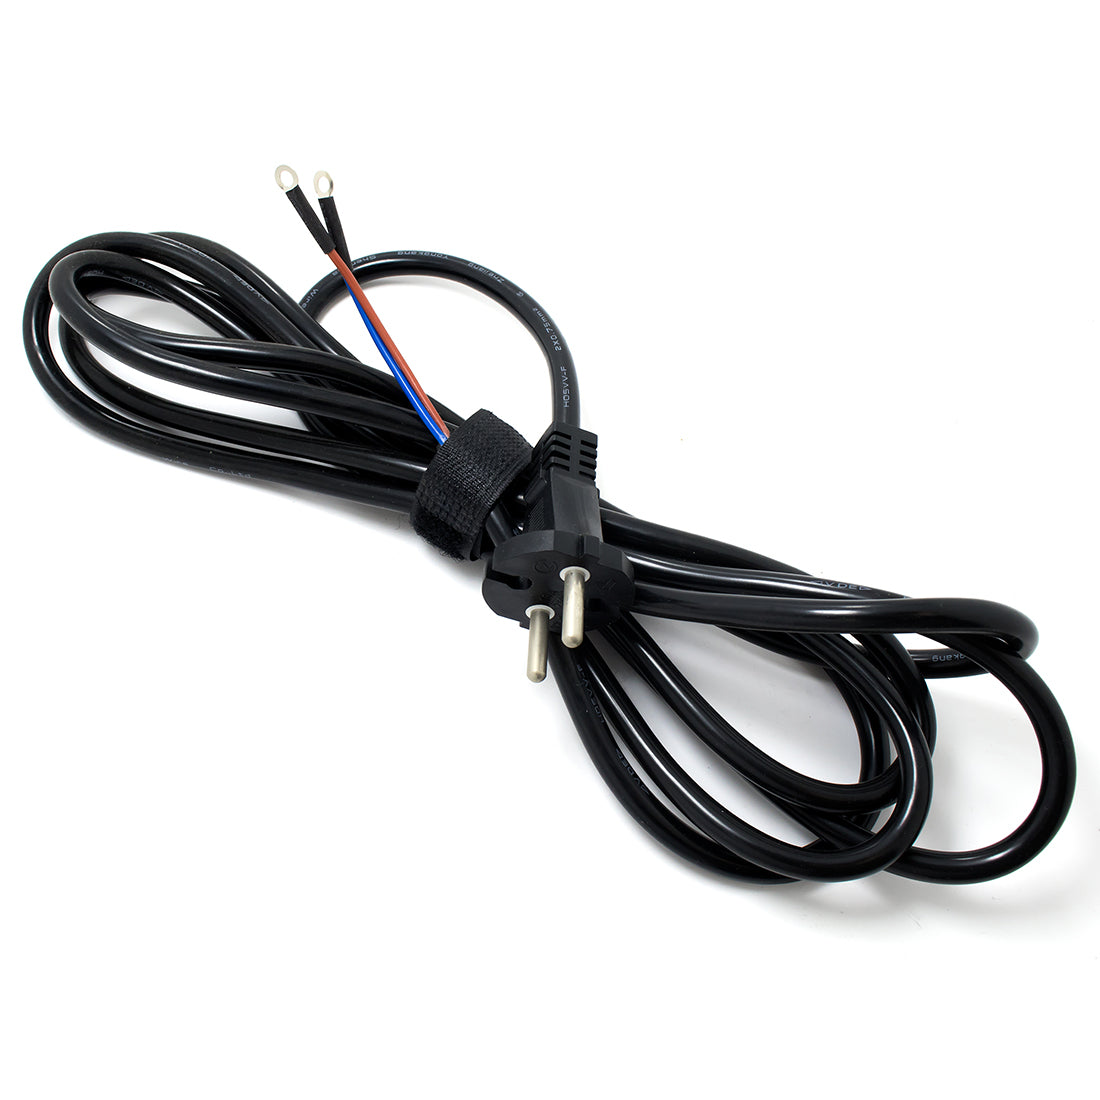 [MBA-059-230] Power cord - 230V - (For Polisher)